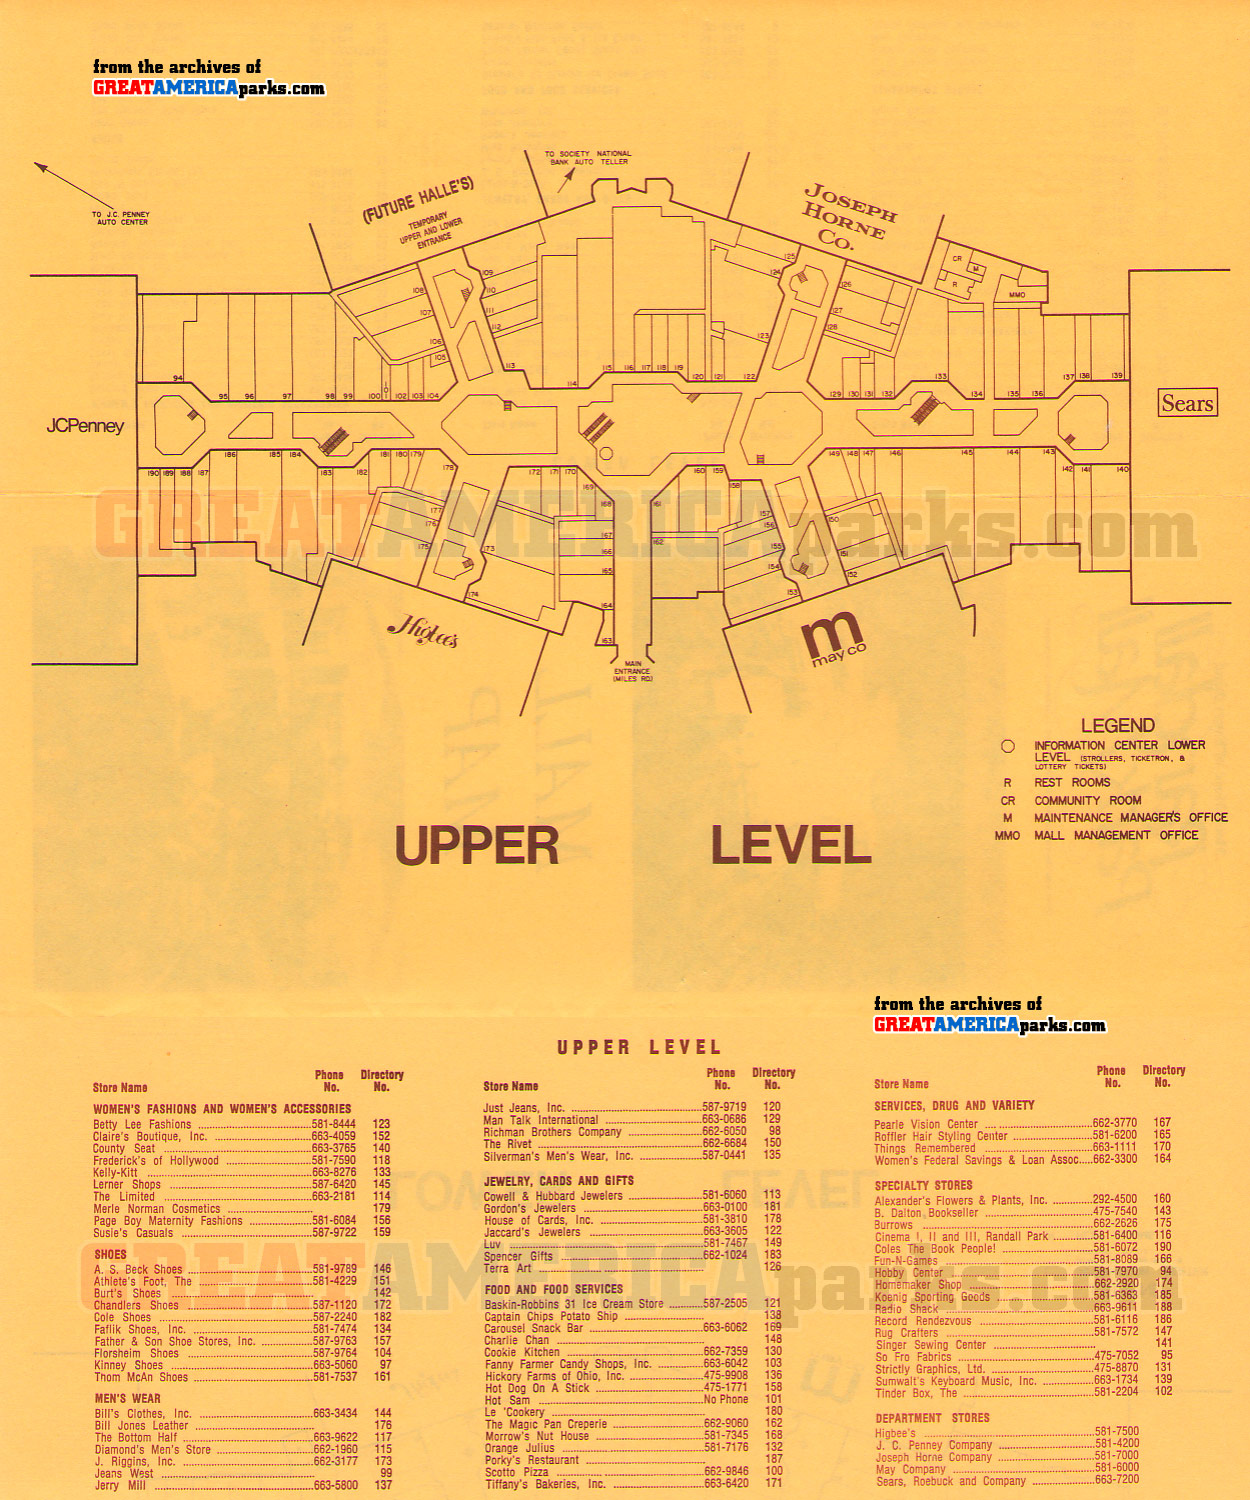 2. Randall Park Mall directory, upper level
1977 Randall Park Mall directory
